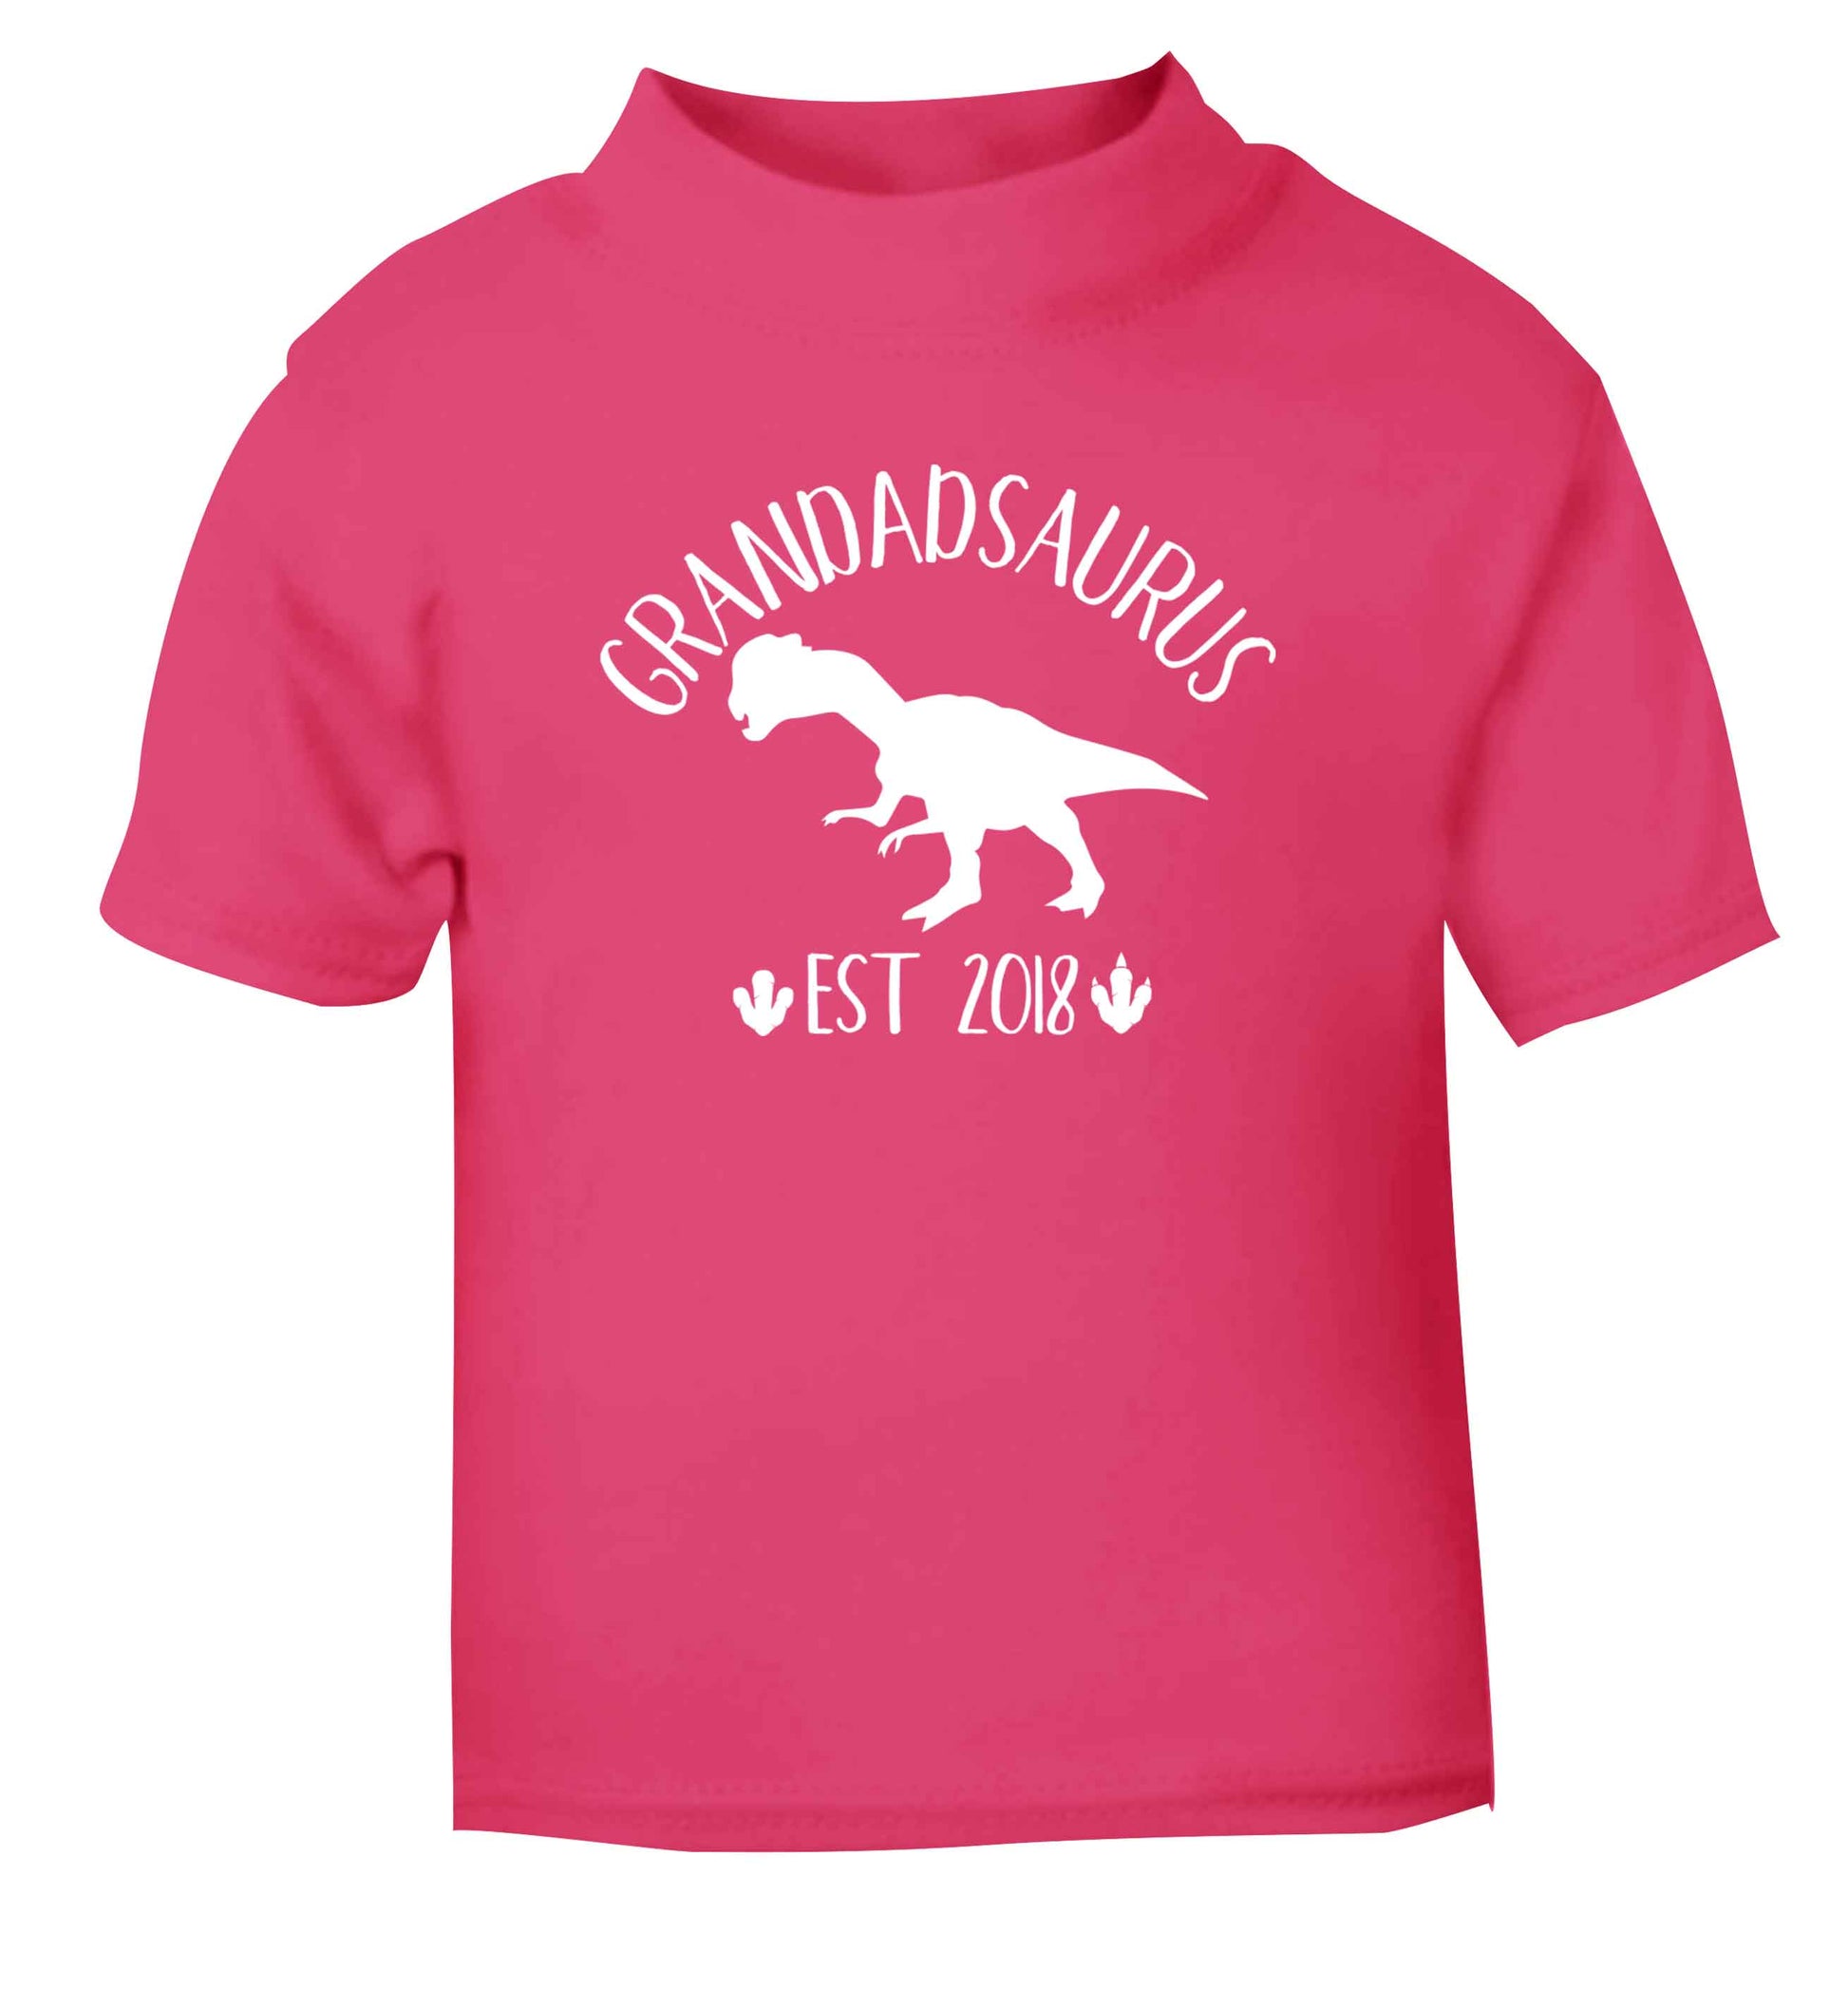 Personalised grandadsaurus since (custom date) pink Baby Toddler Tshirt 2 Years